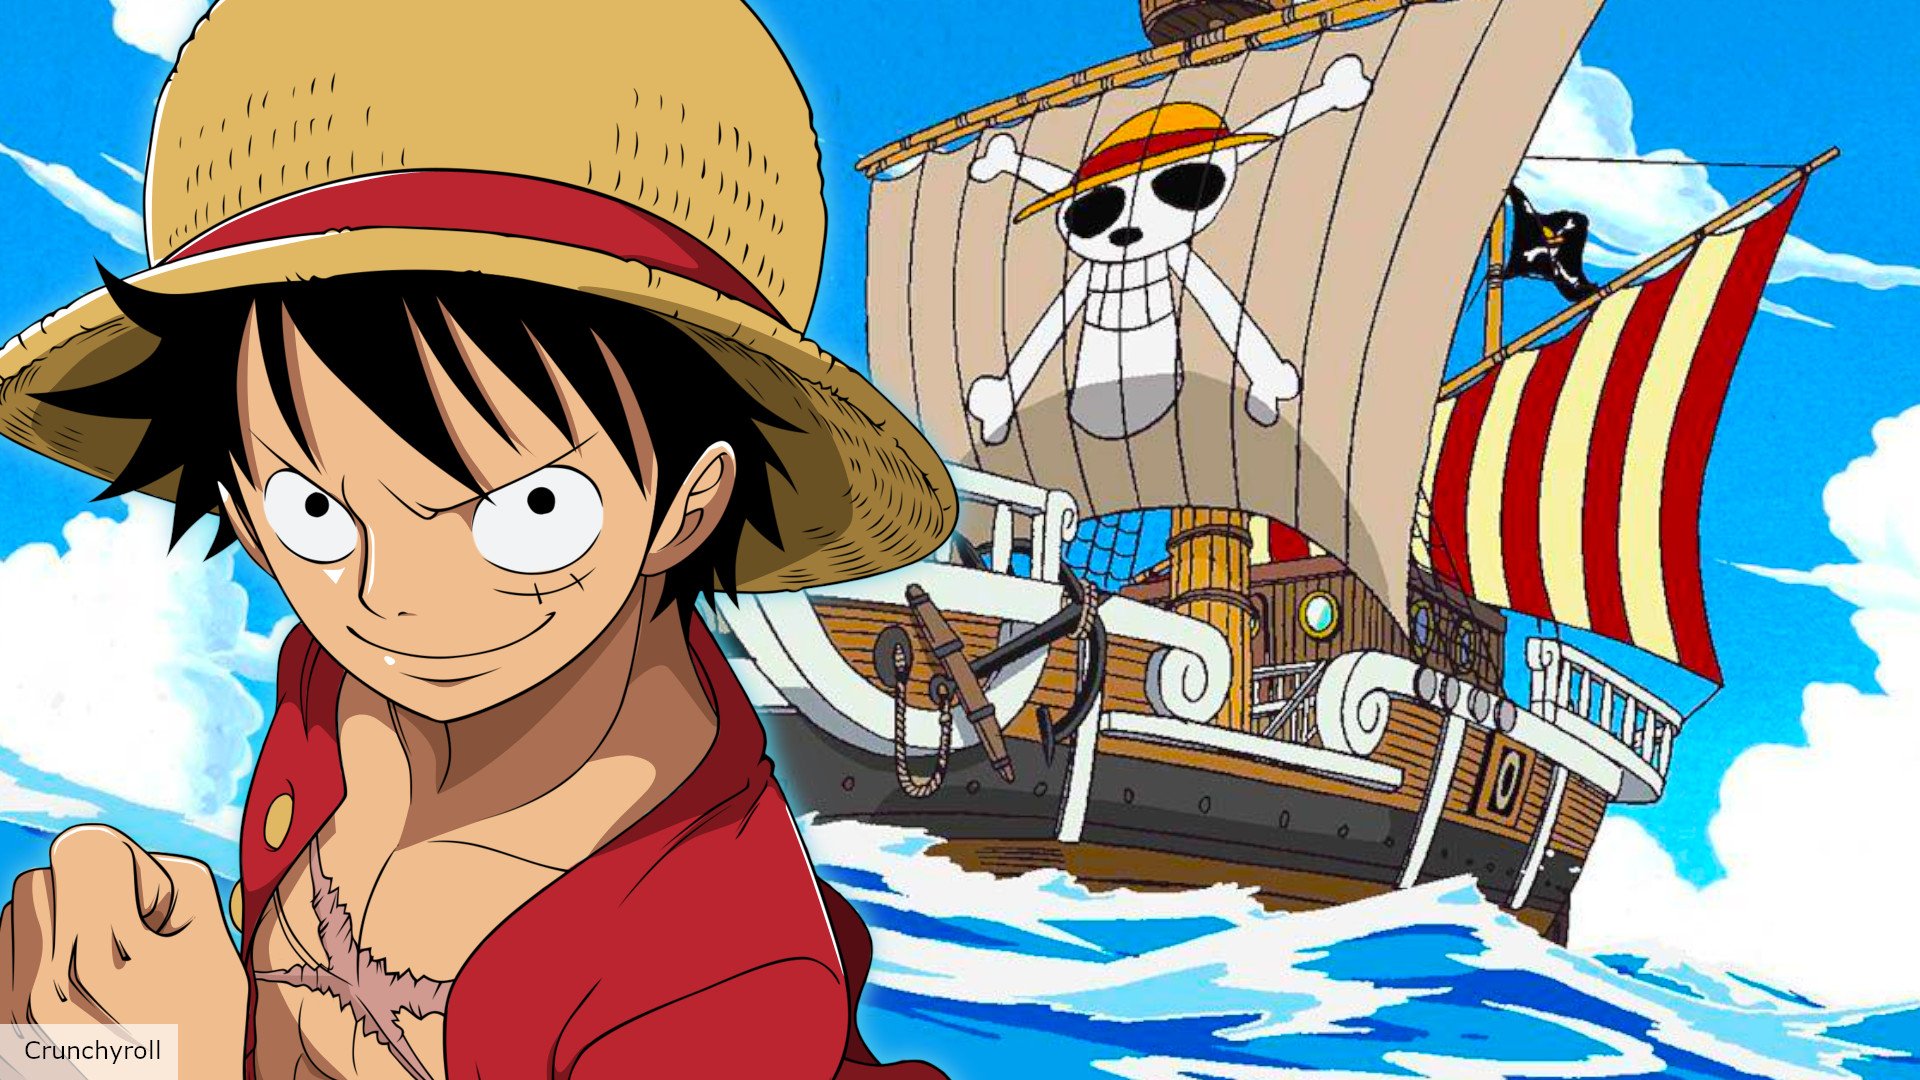 One Piece: Season 2, Episode 15 - Rotten Tomatoes